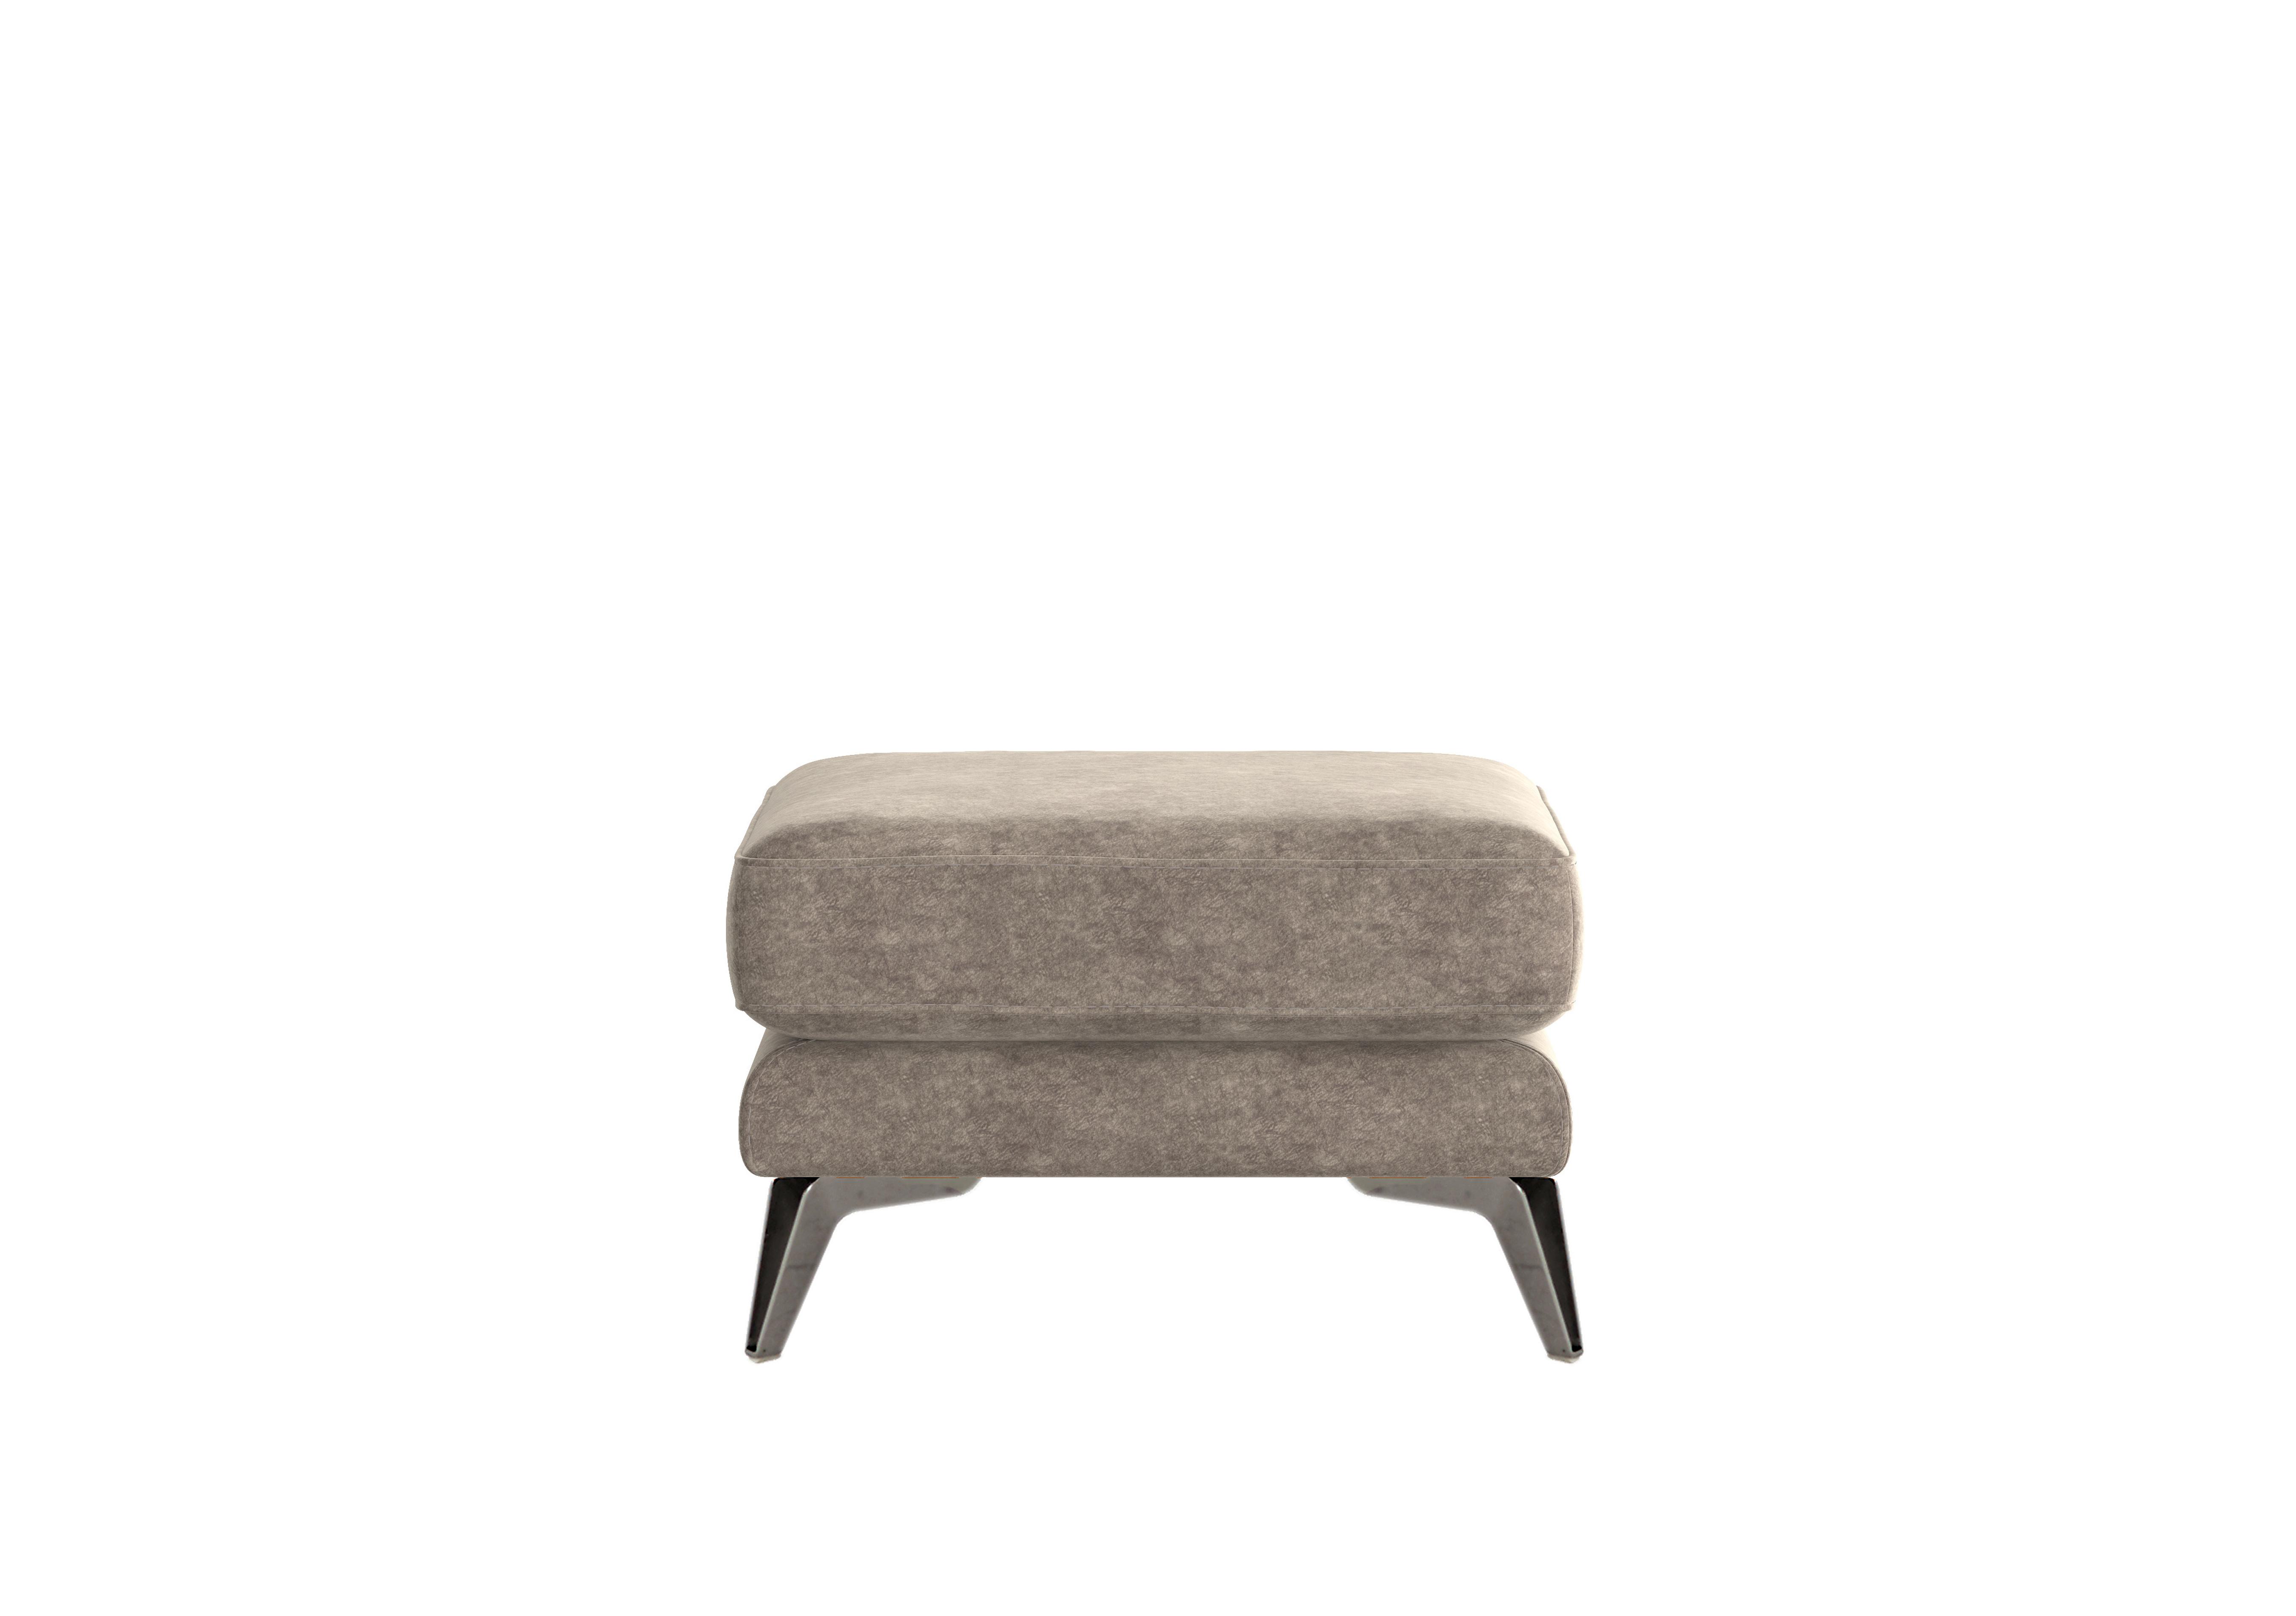 Contempo Fabric Footstool in Bfa-Bnn-R29 Fv1 Mink on Furniture Village